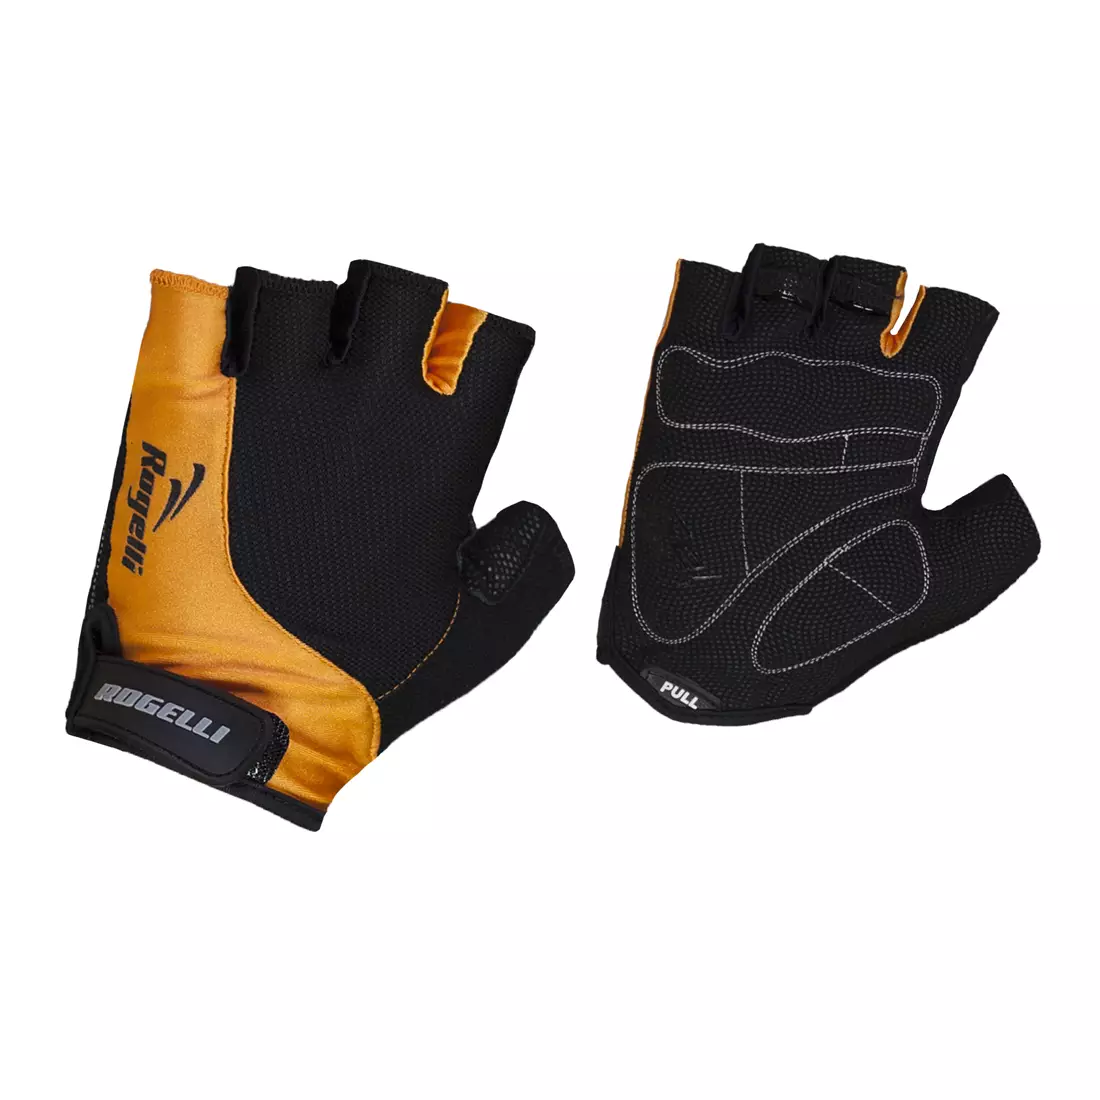 Pánské cyklistické rukavice ROGELLI BIKE PRESA 006.356, černé a oranžové